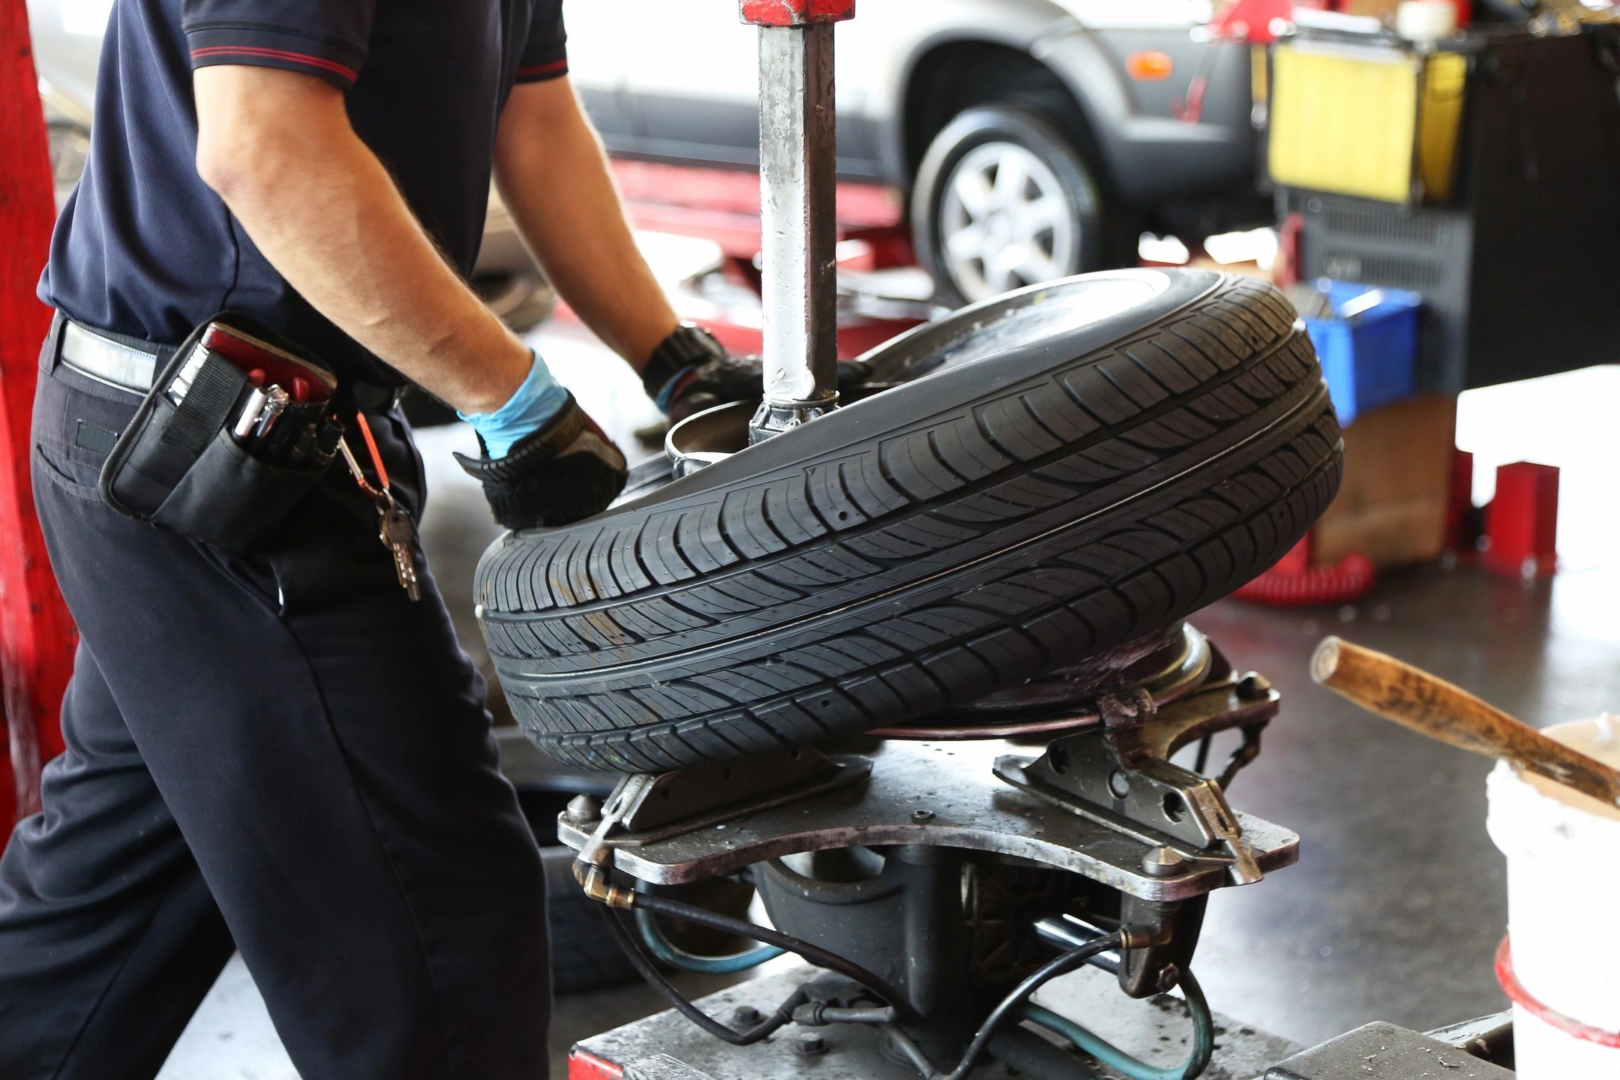 A person repairing a tire